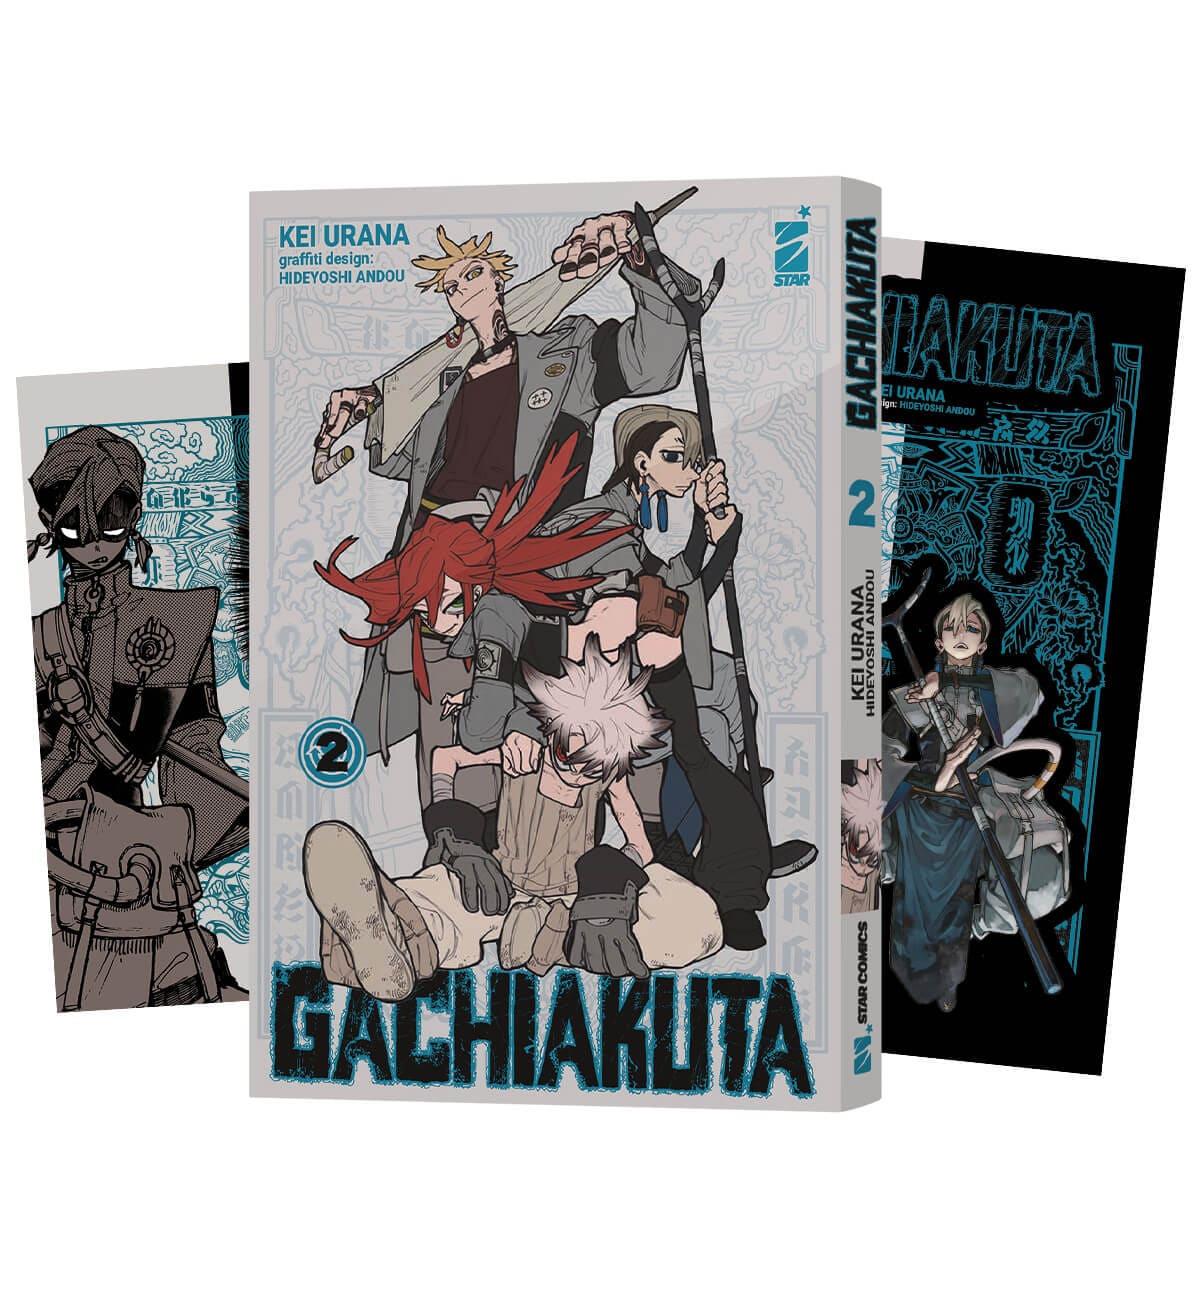 Gachiakuta vol 2 VARIANT COVER EDITION